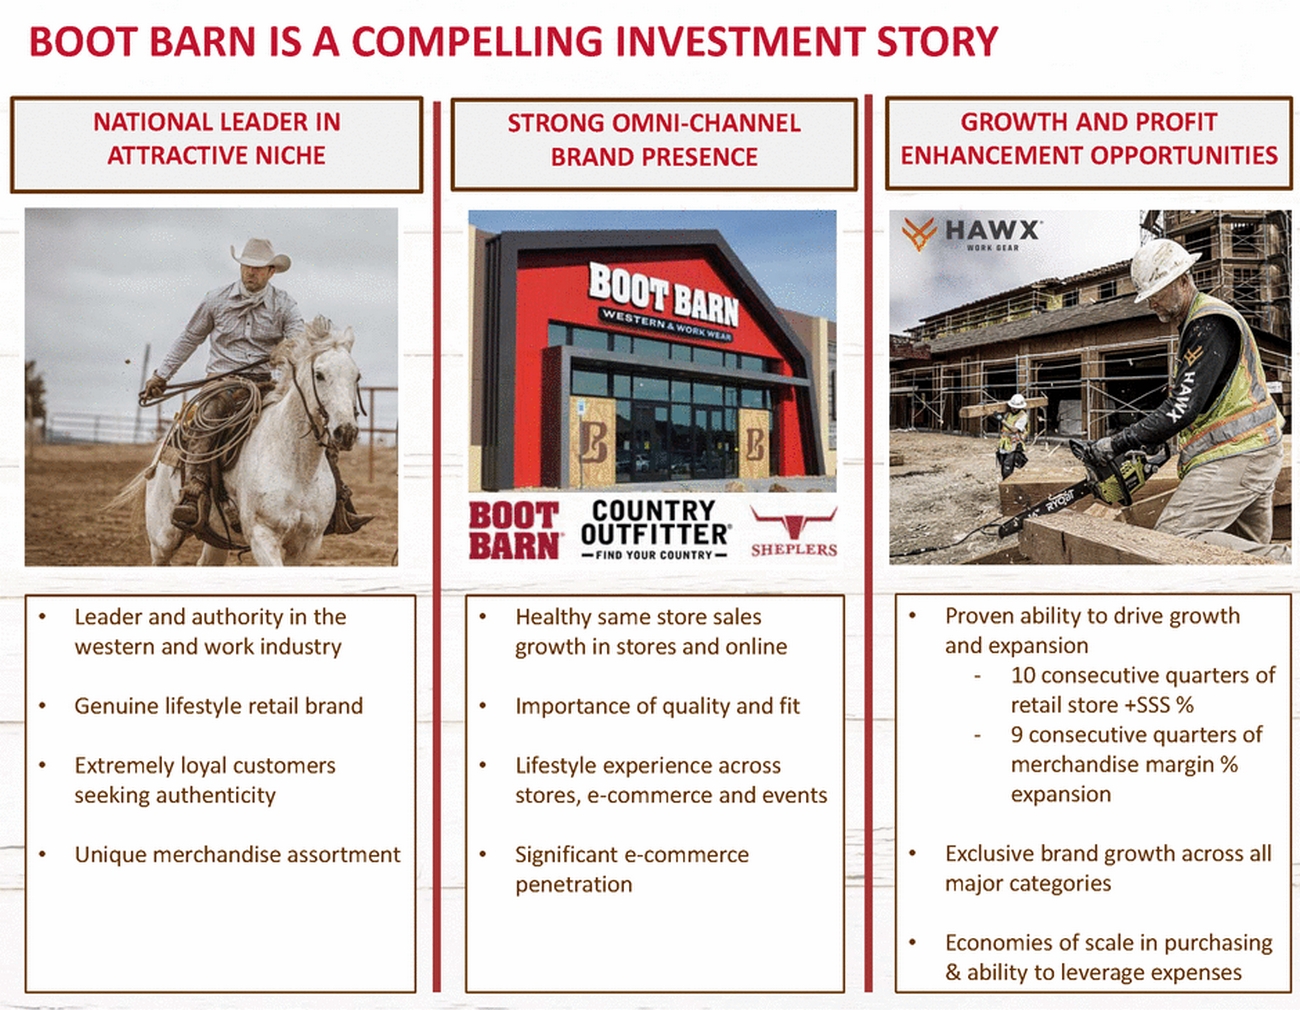 21745-1-mm_boot barn investor presentation - november 2019 ndr v4_page_05.jpg